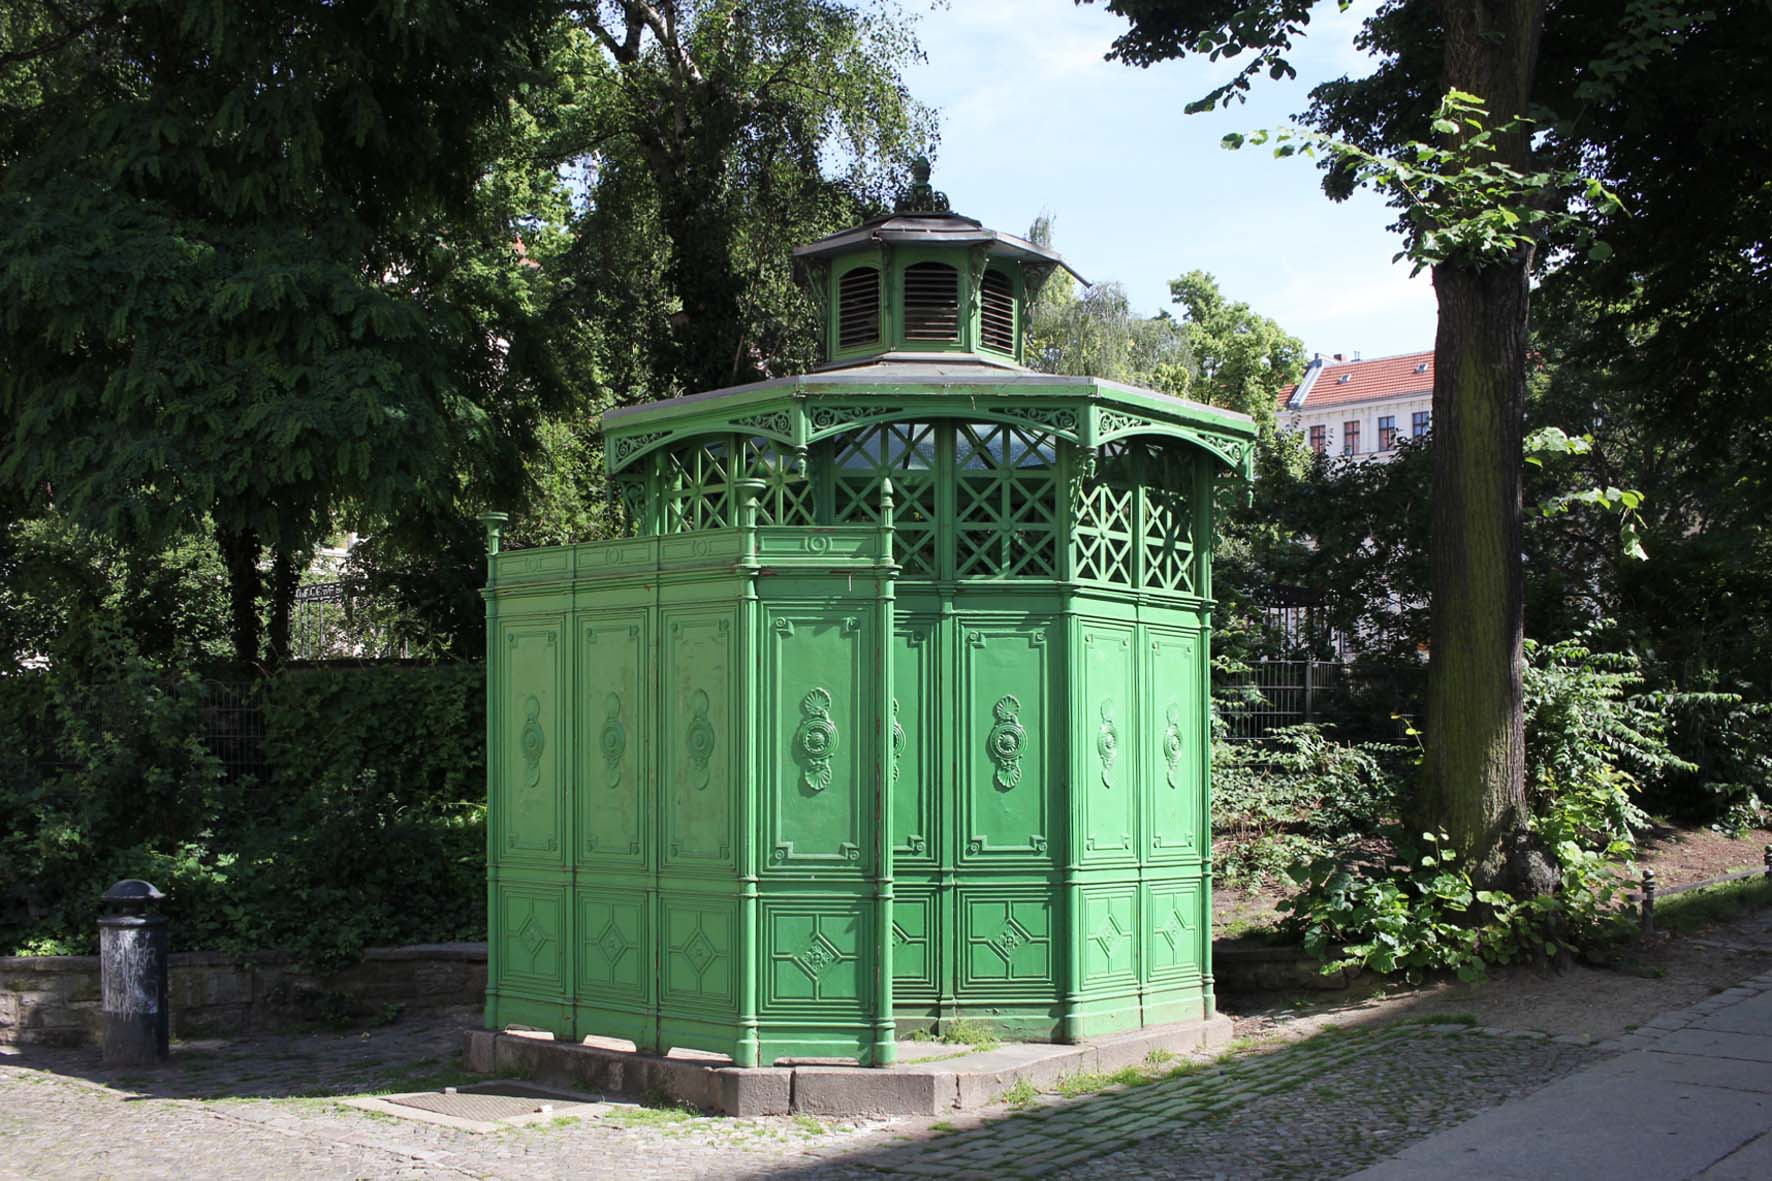 Café Achteck - Chamissoplatz - an example of Berlin's classic 19th century green cast iron public toilets